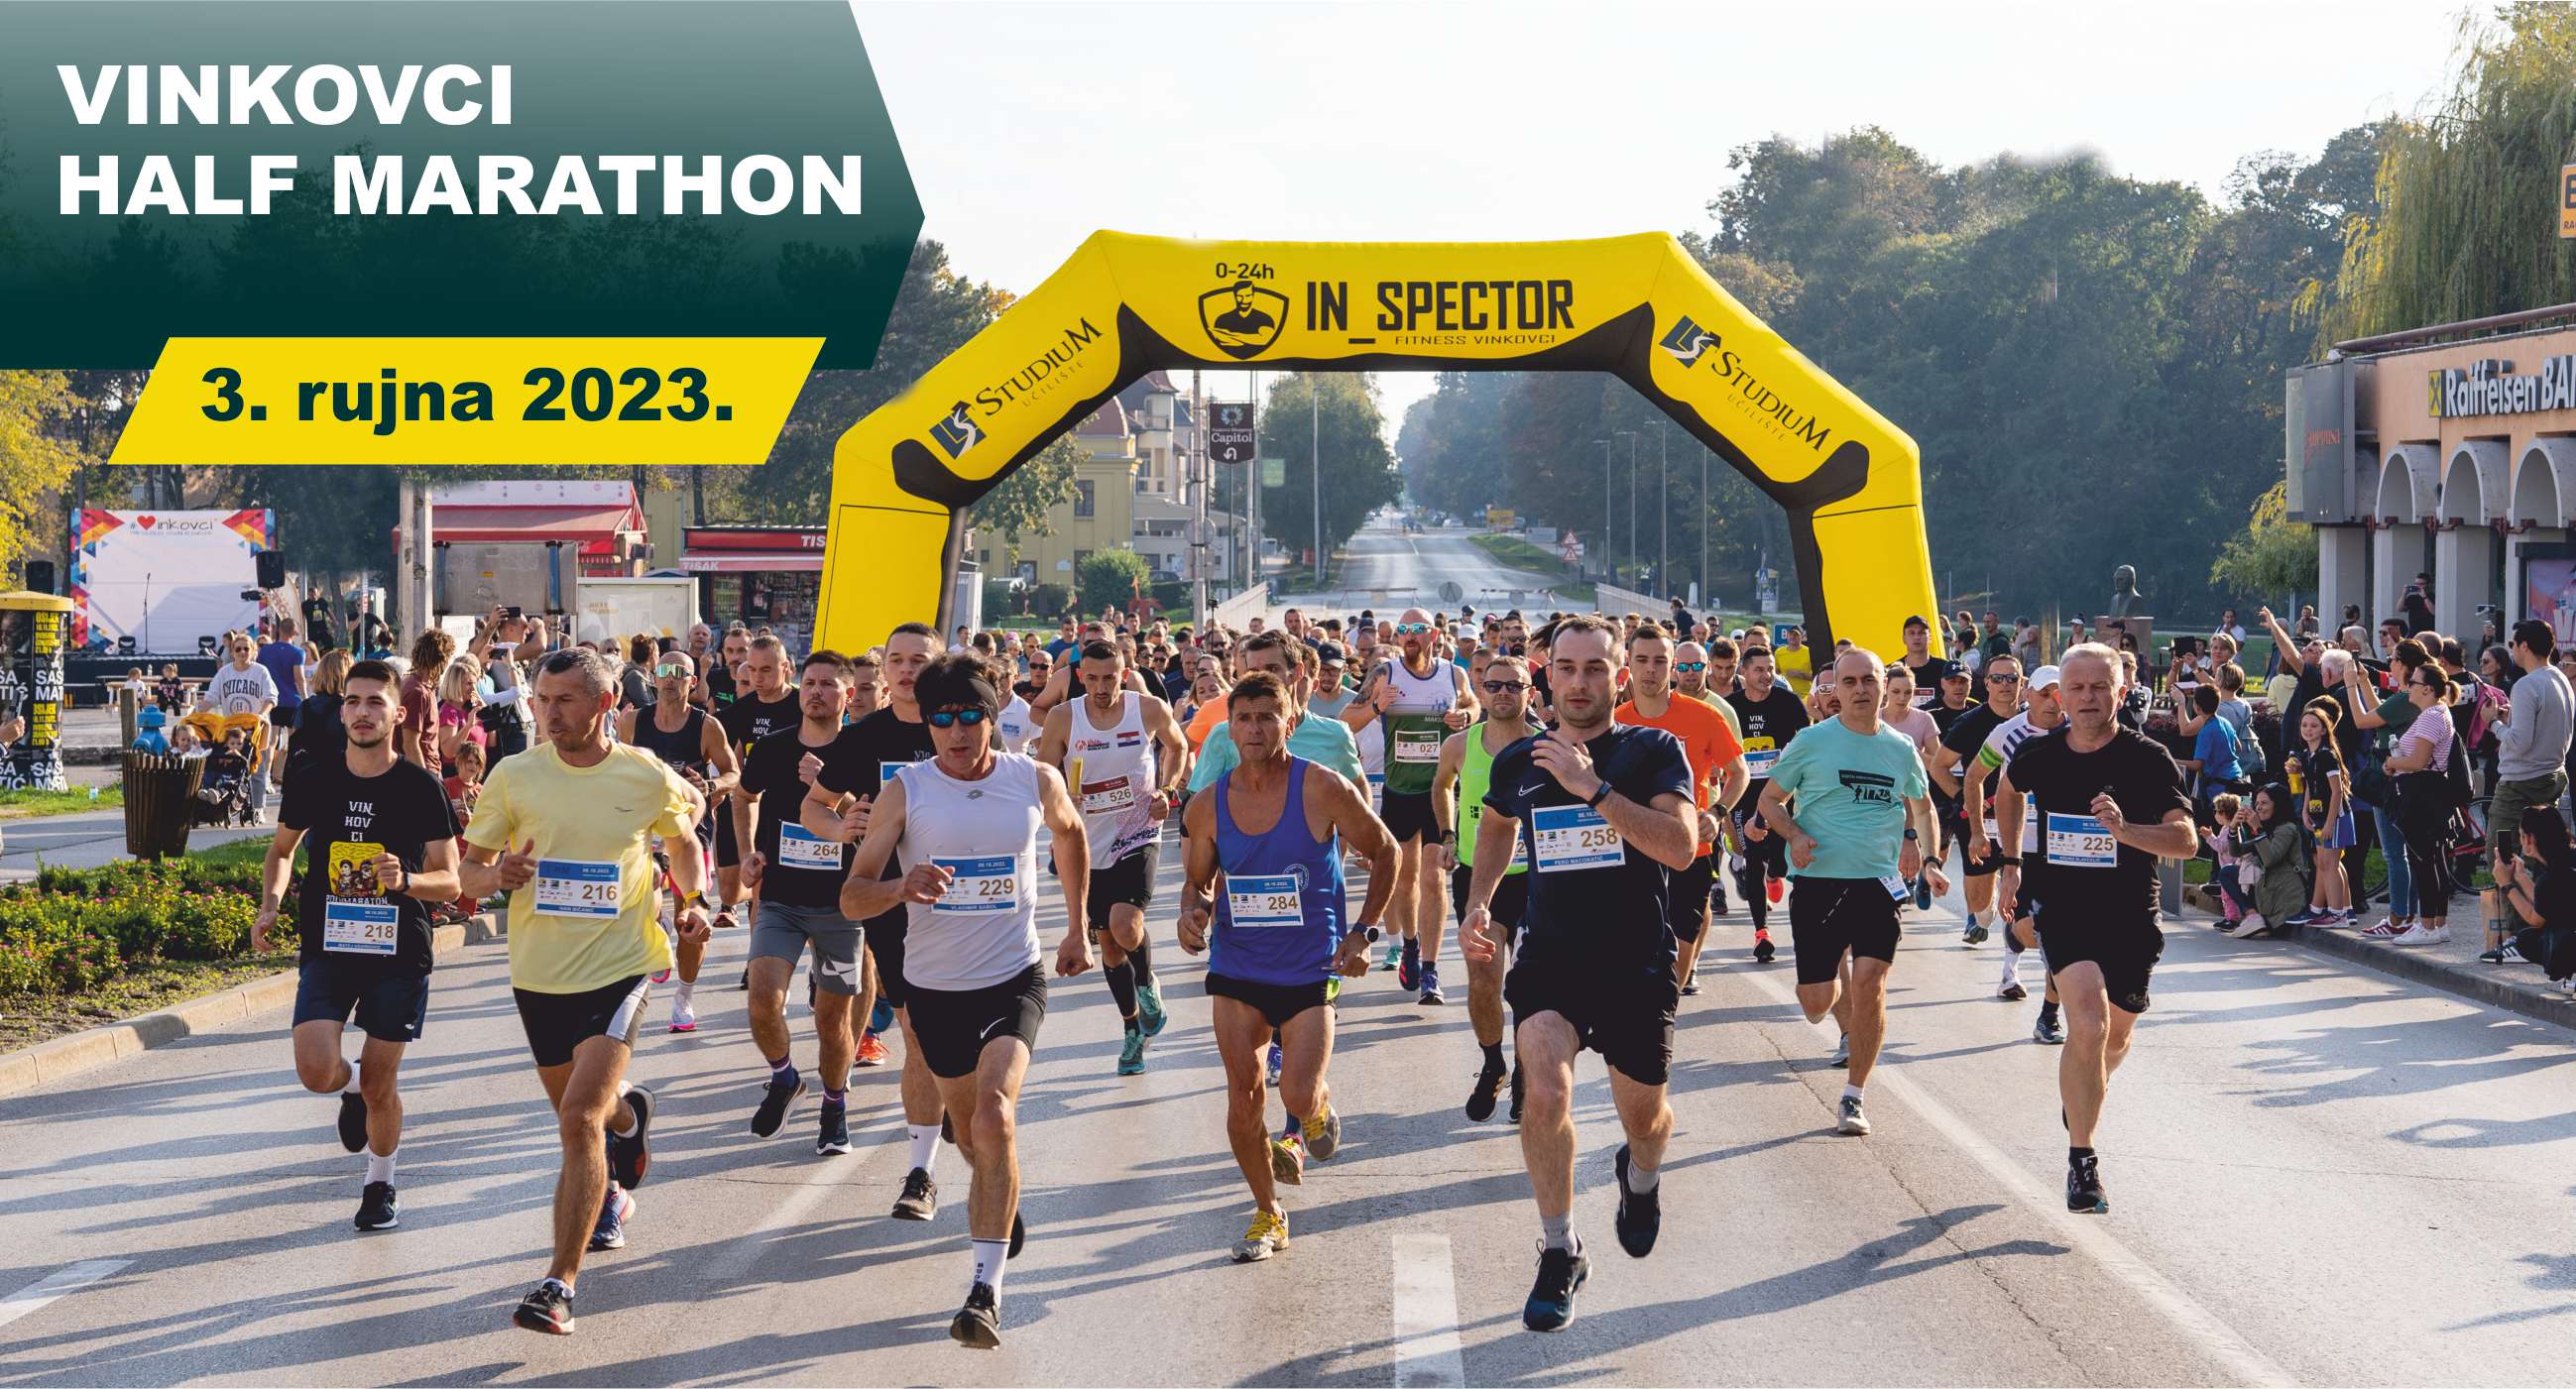 Vinkovci Half Marathon 2023